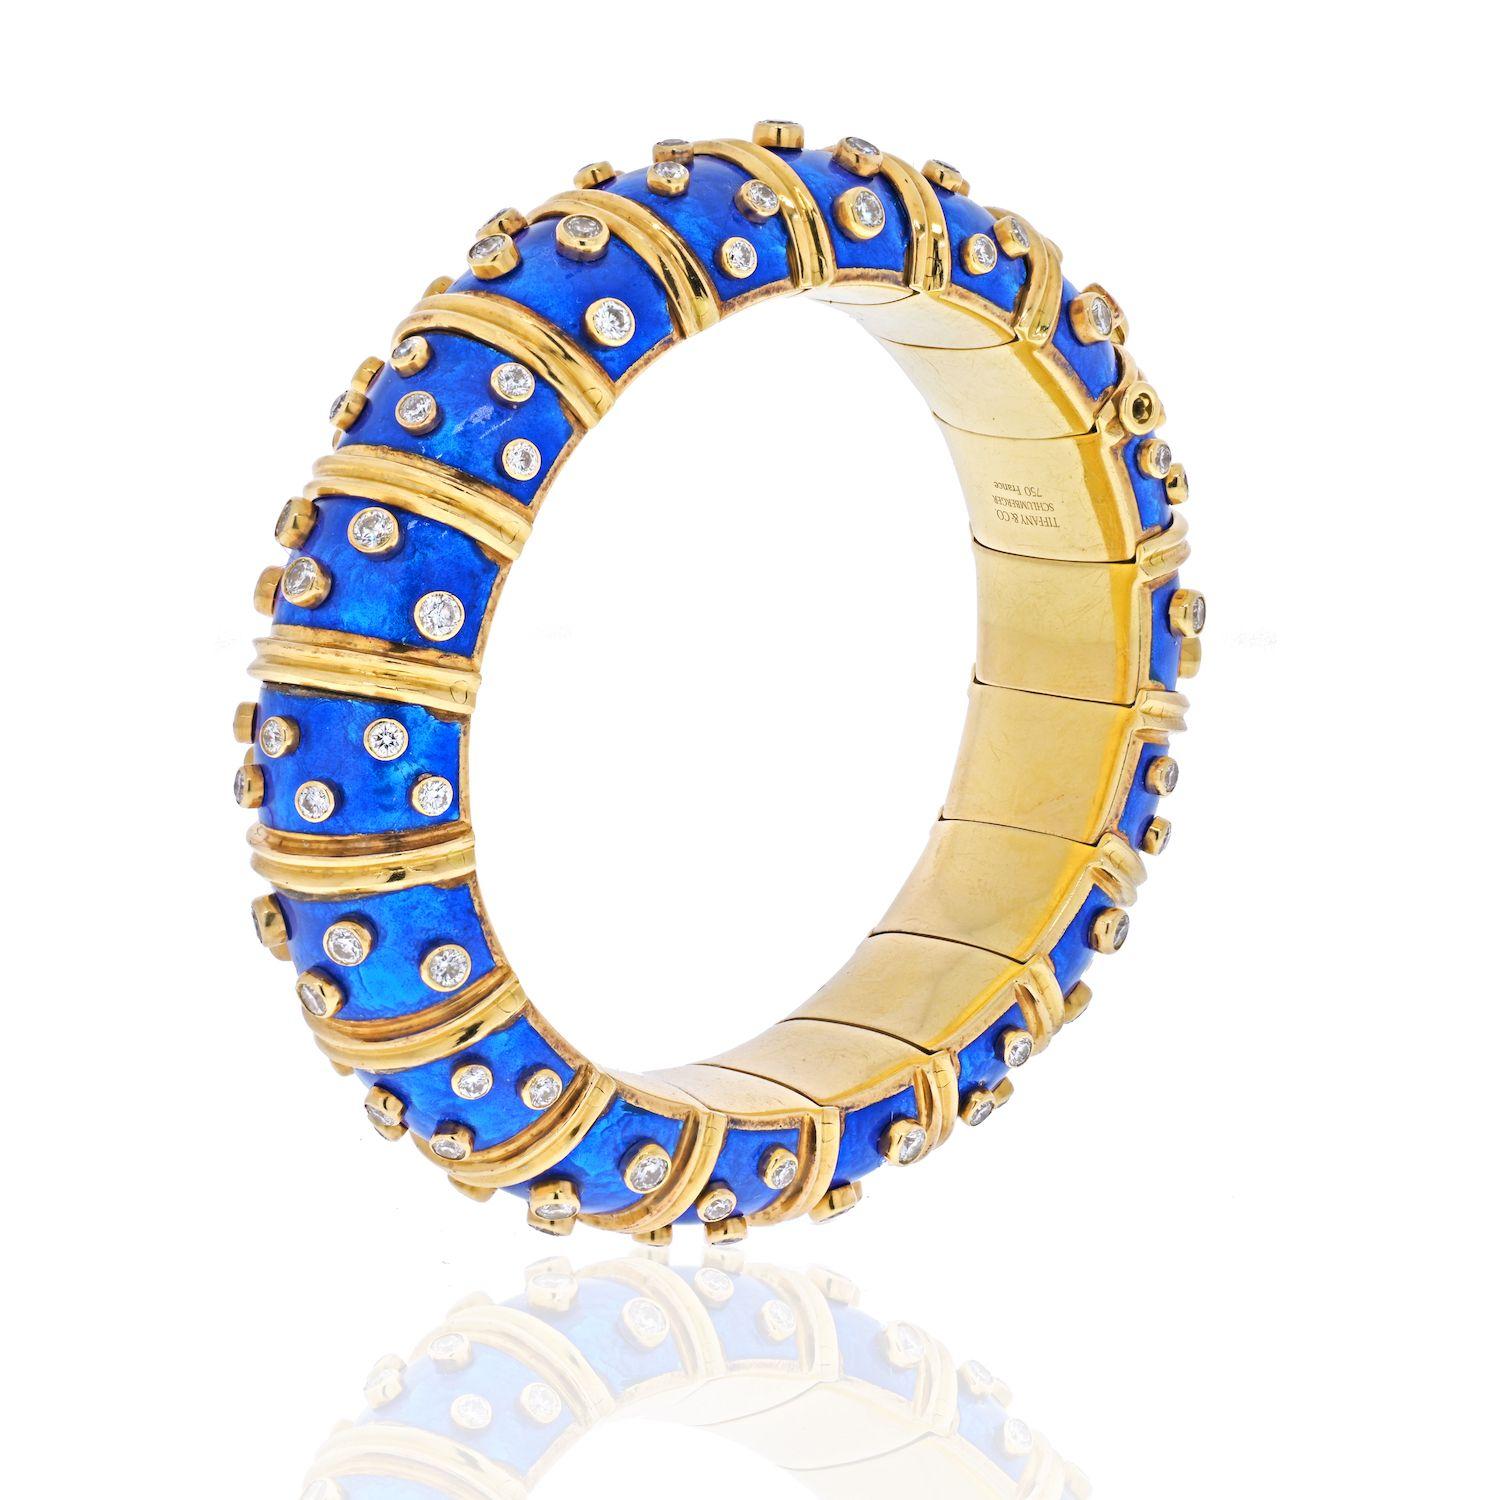 Tiffany & Co. Schlumberger Blue Enamel Diamond Bracelet. 

Also knows as 